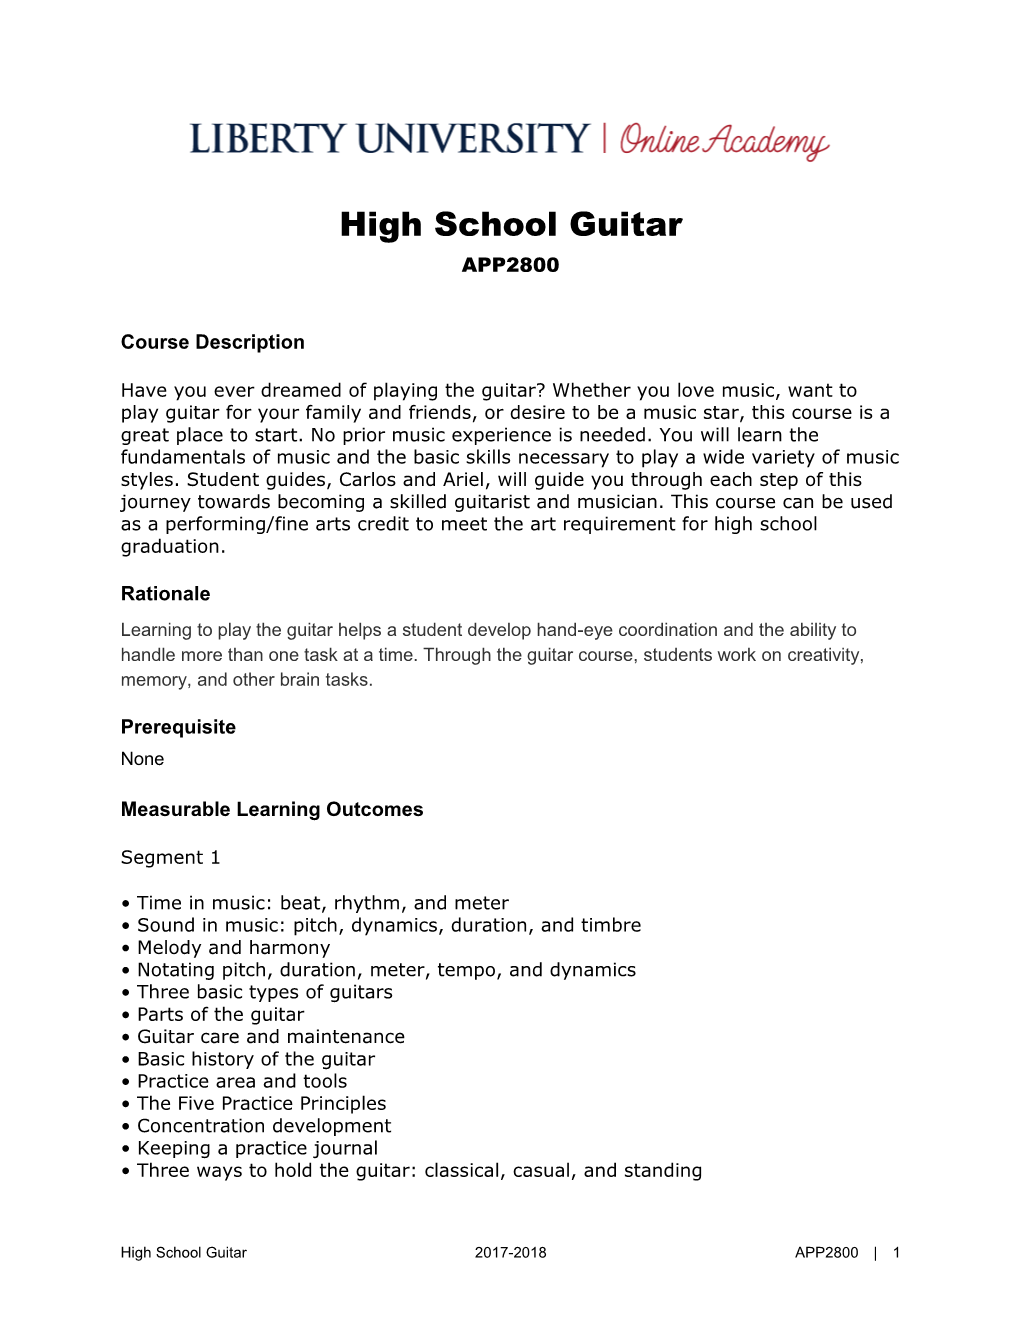 High School Guitar APP2800